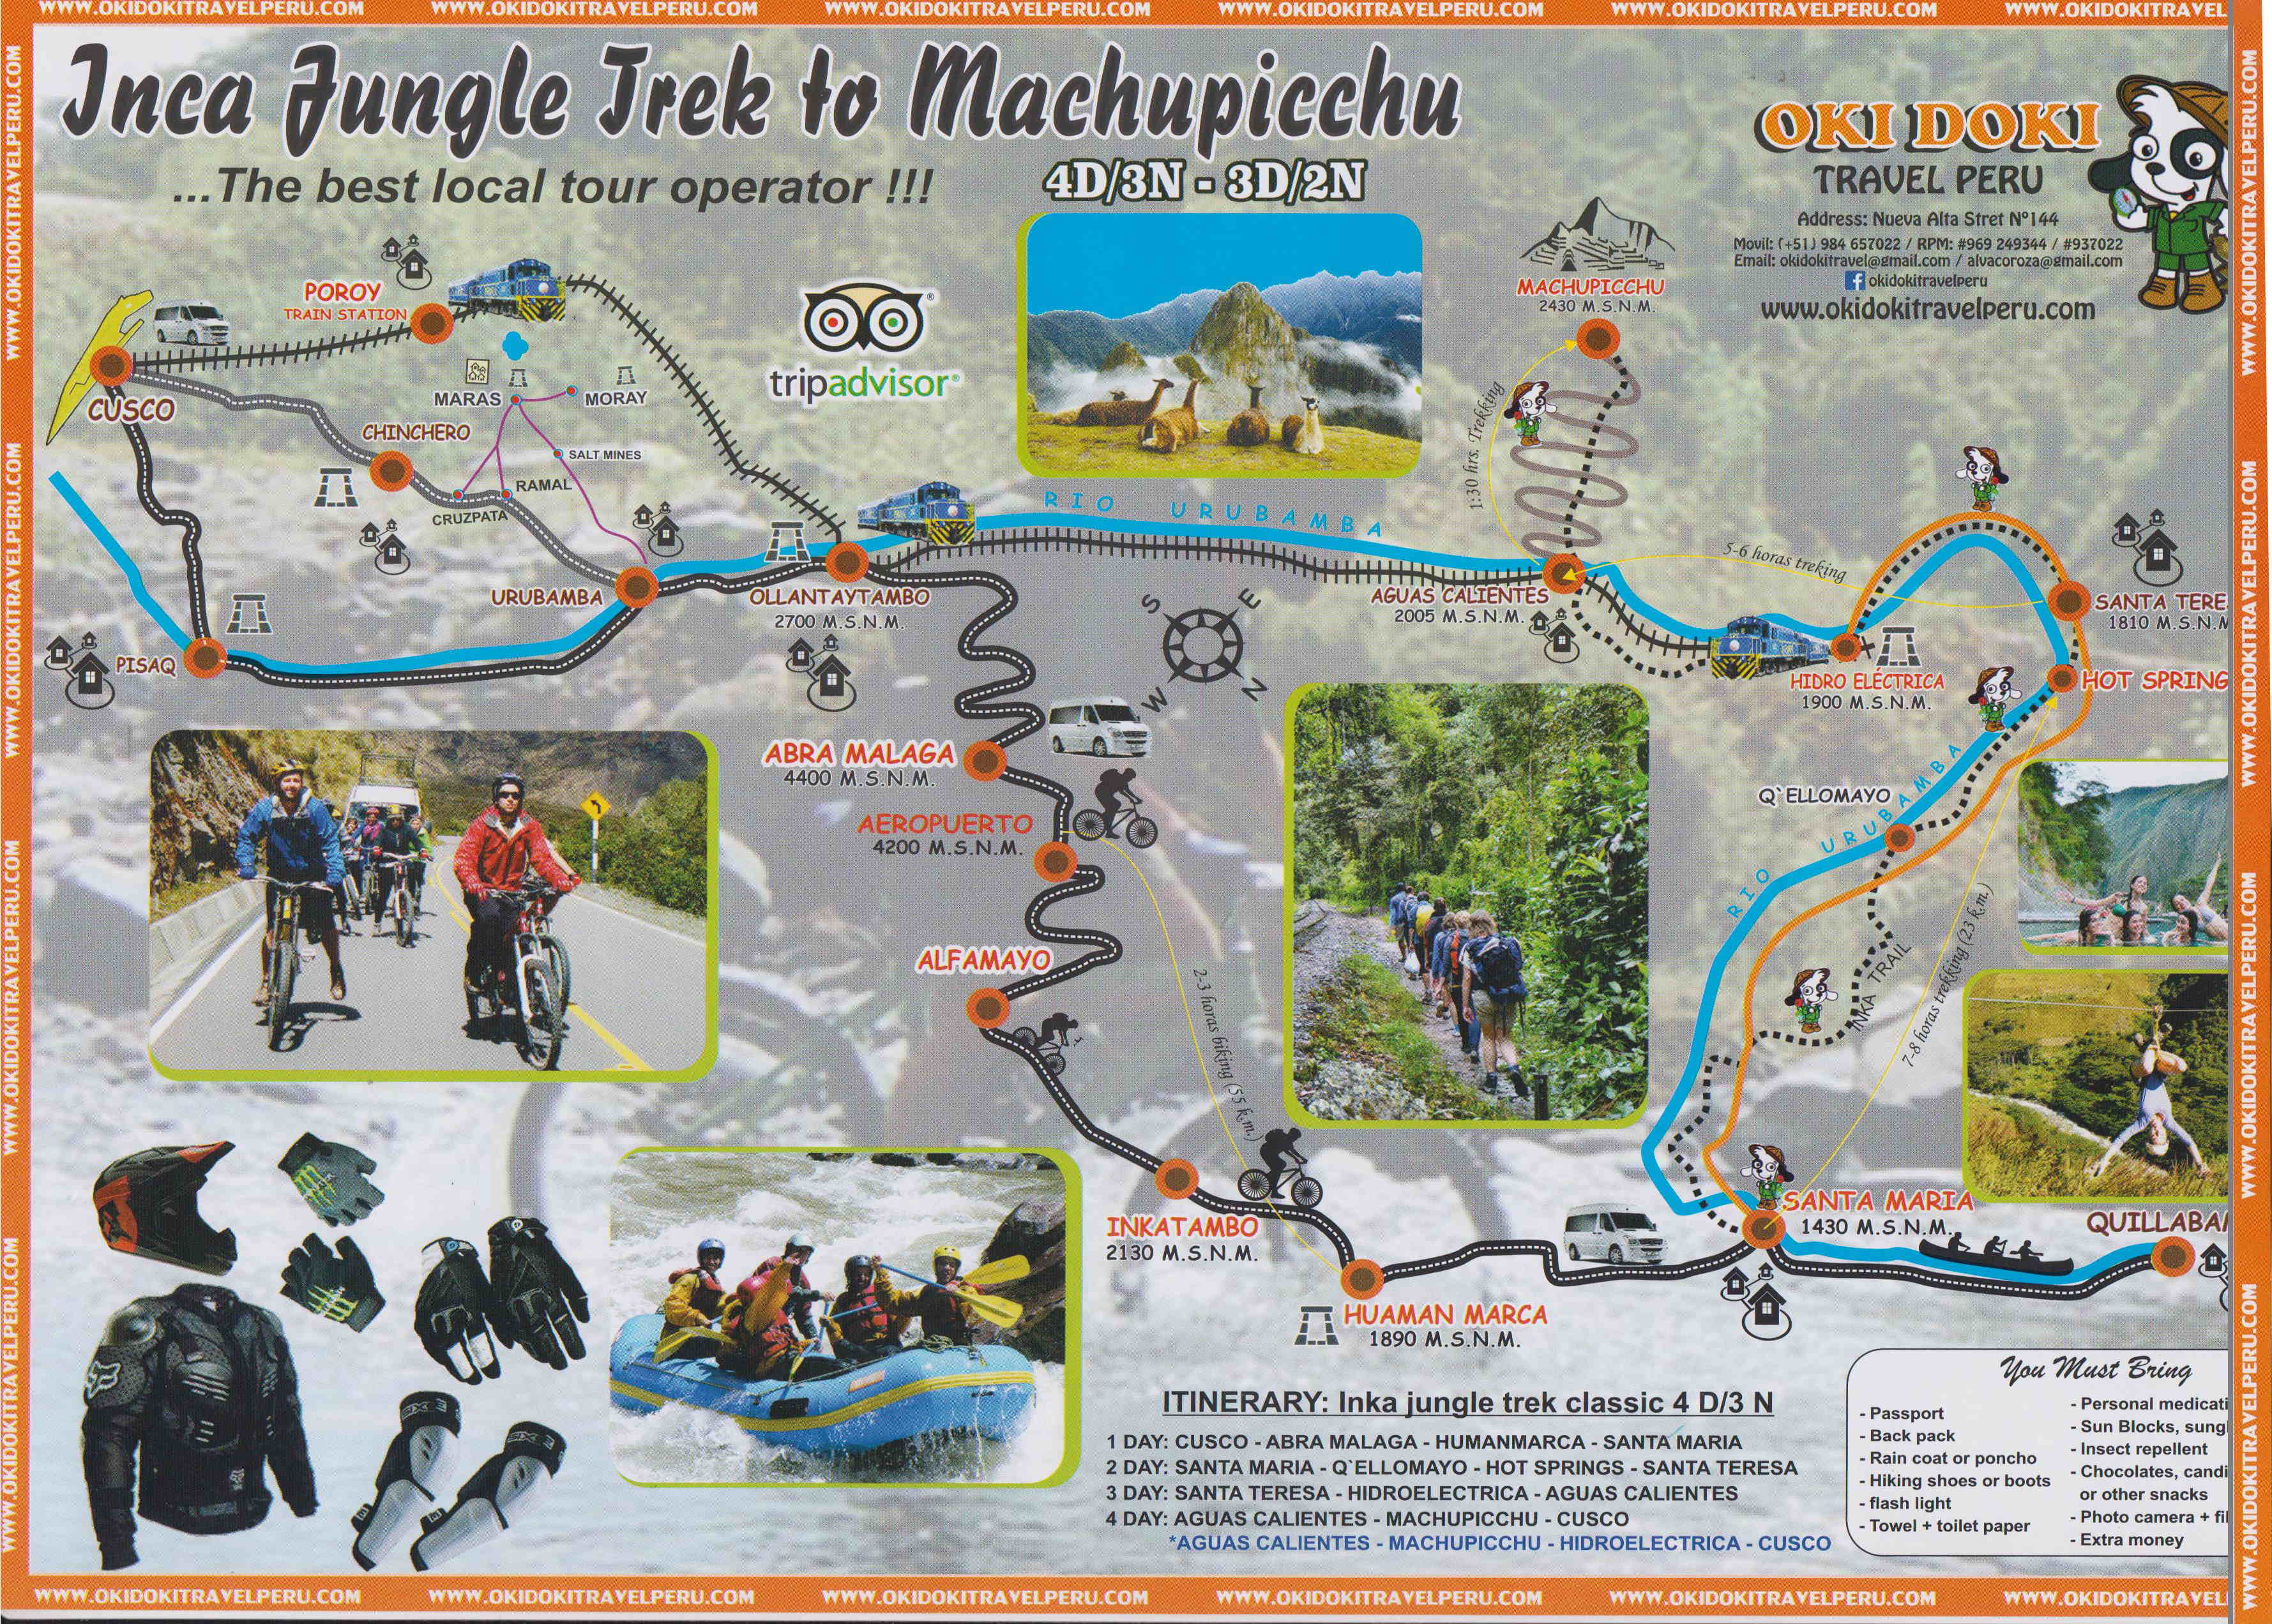 TOURS MAP: Inka Jungle Trek to Machu Picchu 4 days return by train last day - Okidoki Travel Peru